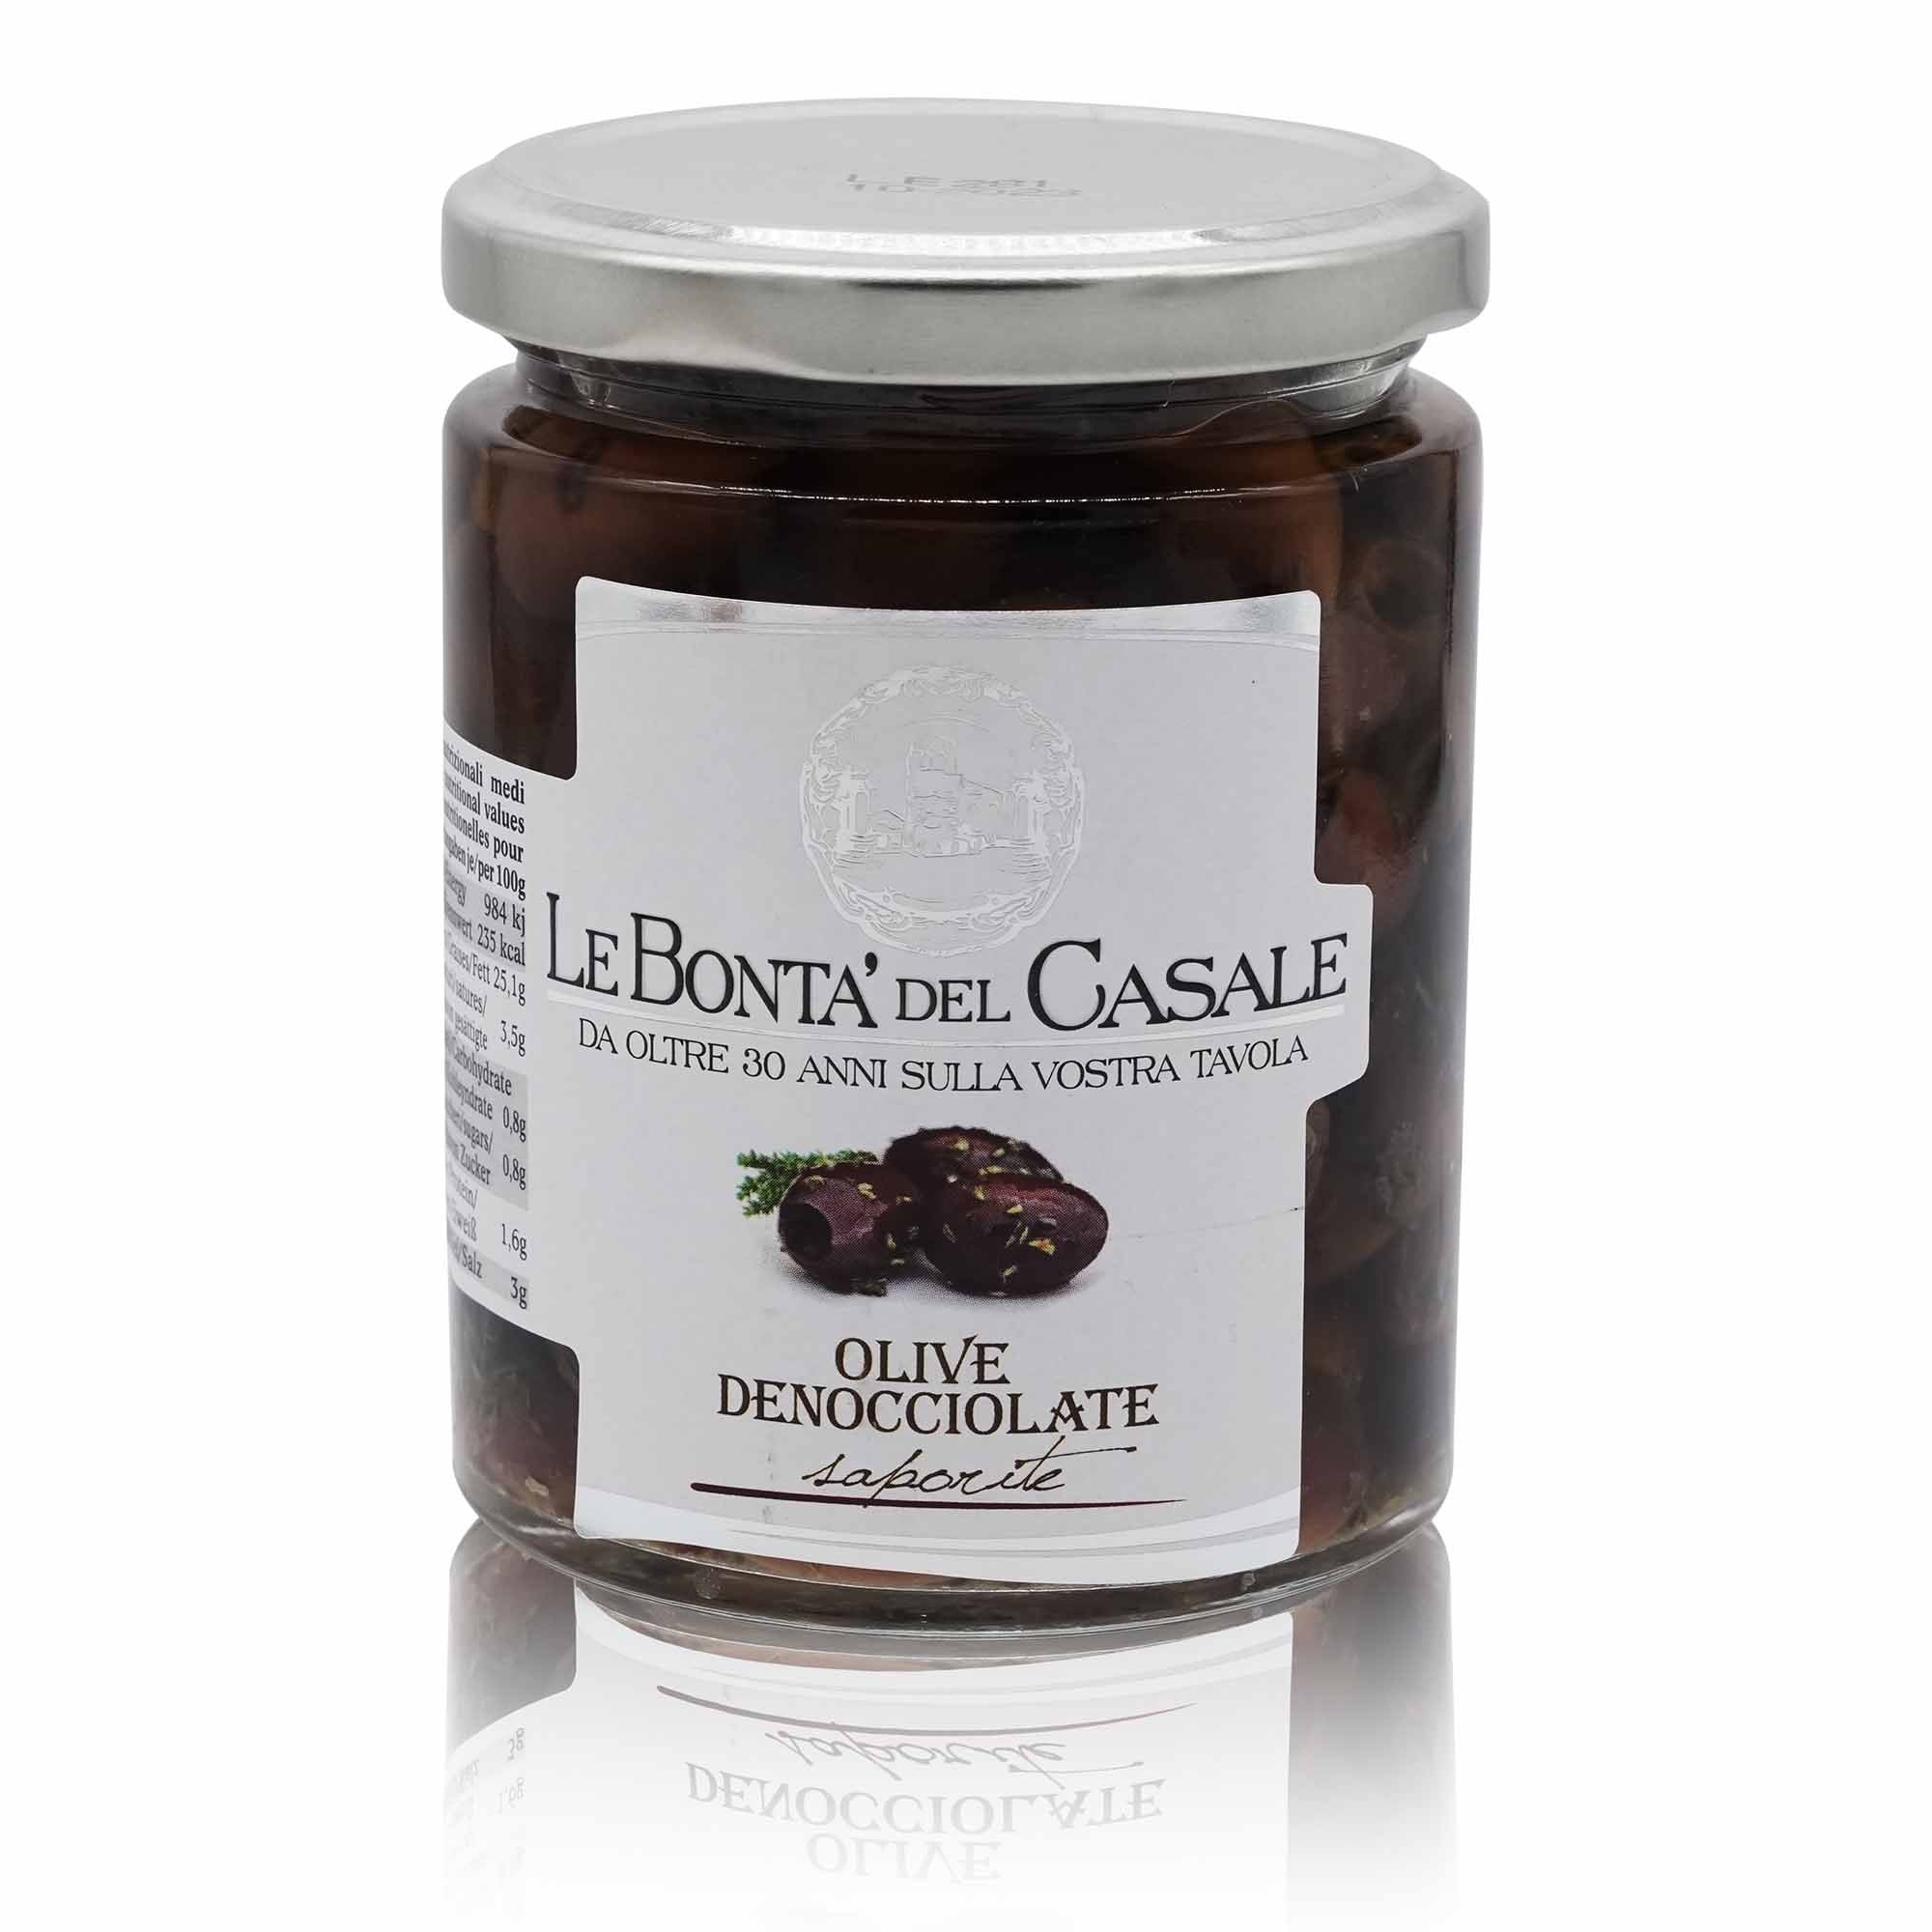 LE BONTÀ DEL CASALE Olive denocciolate – Oliven entsteint - 0,280kg - italienisch-einkaufen.de